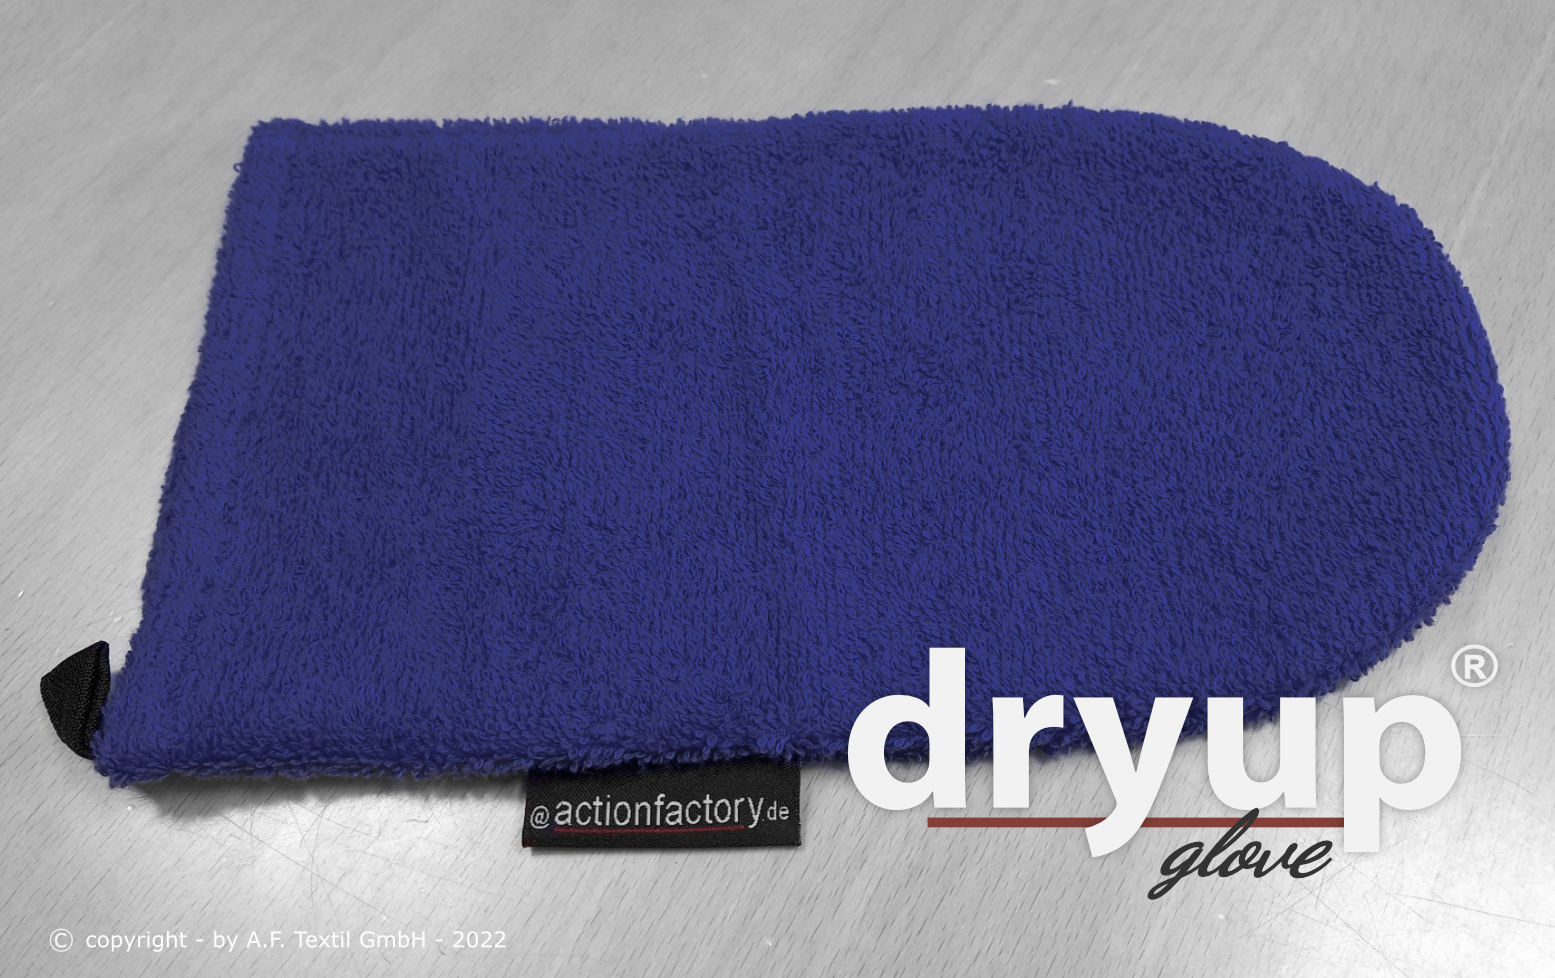 Dryup® glove blueberry